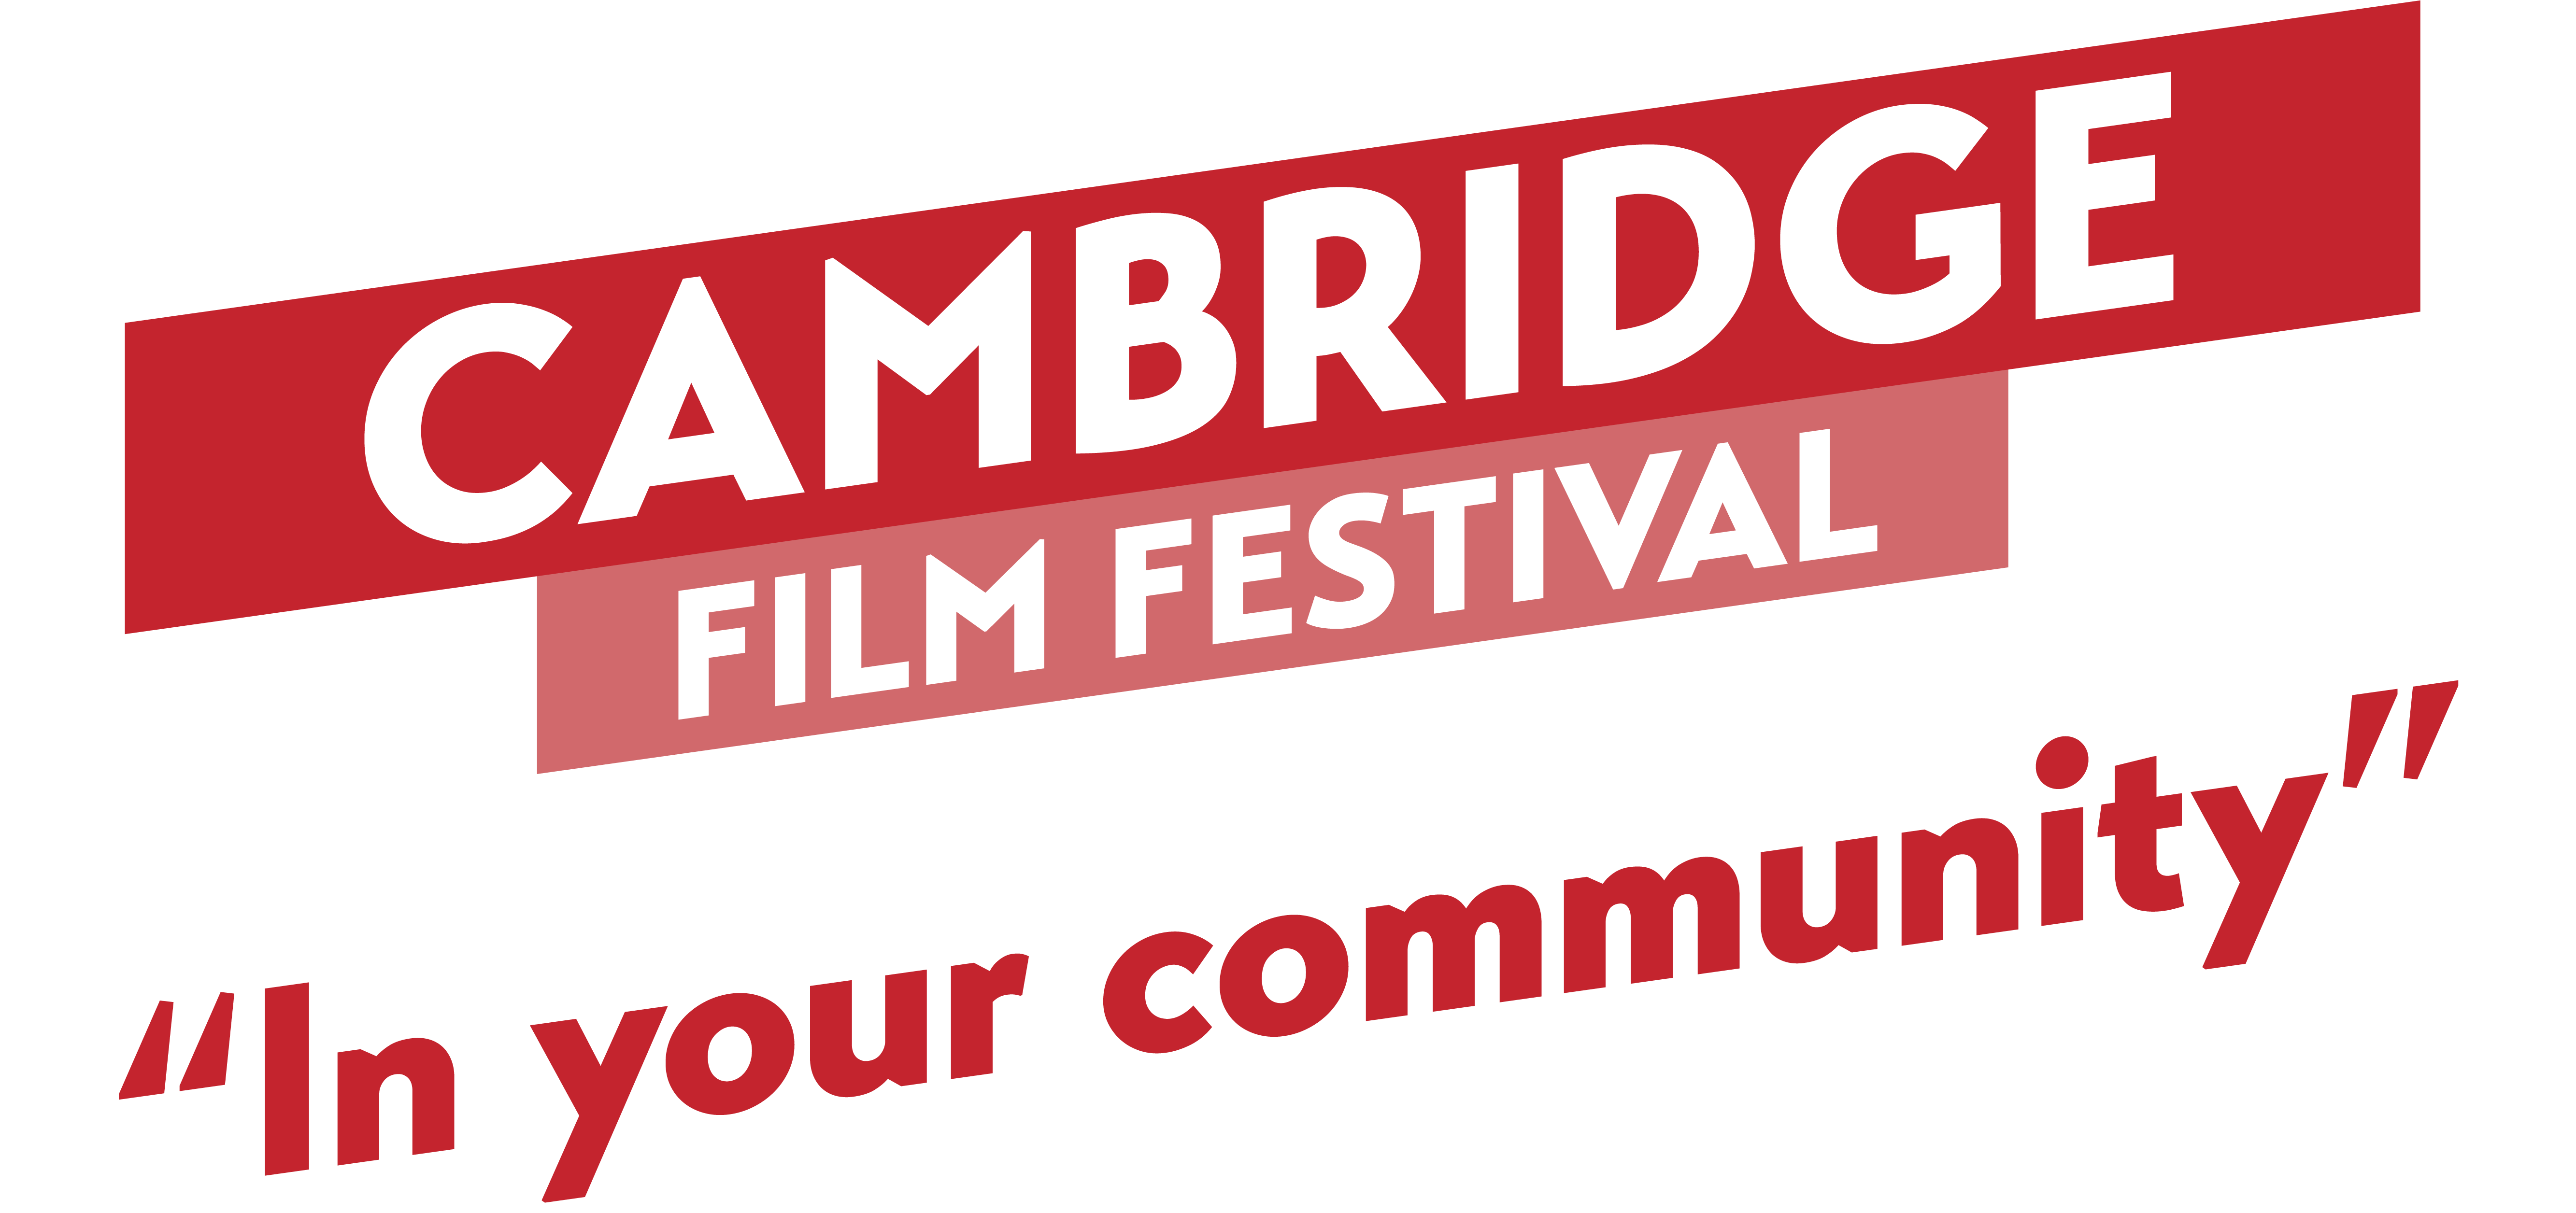 Cambridge Film Festival in your community red logo